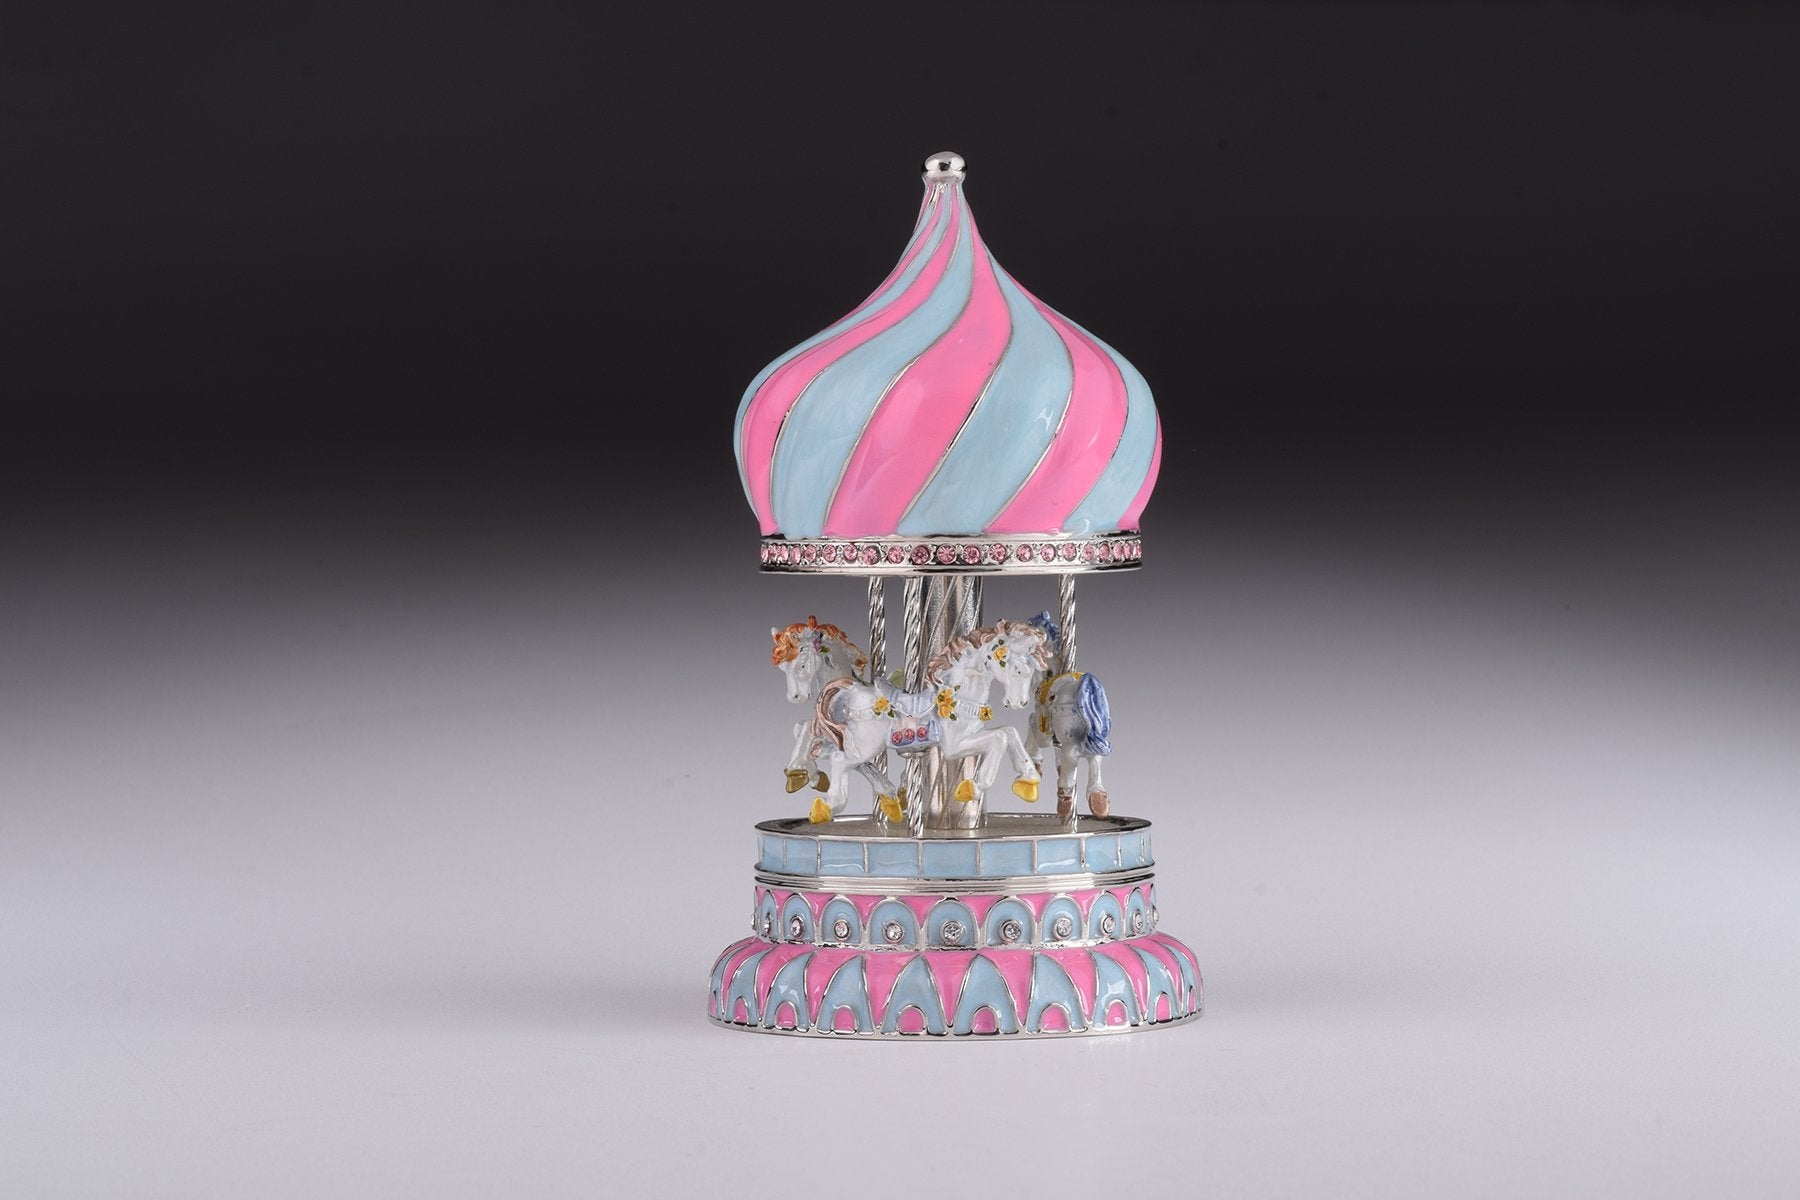 Pink Wind up Musical Carousel Carousel music box Keren Kopal